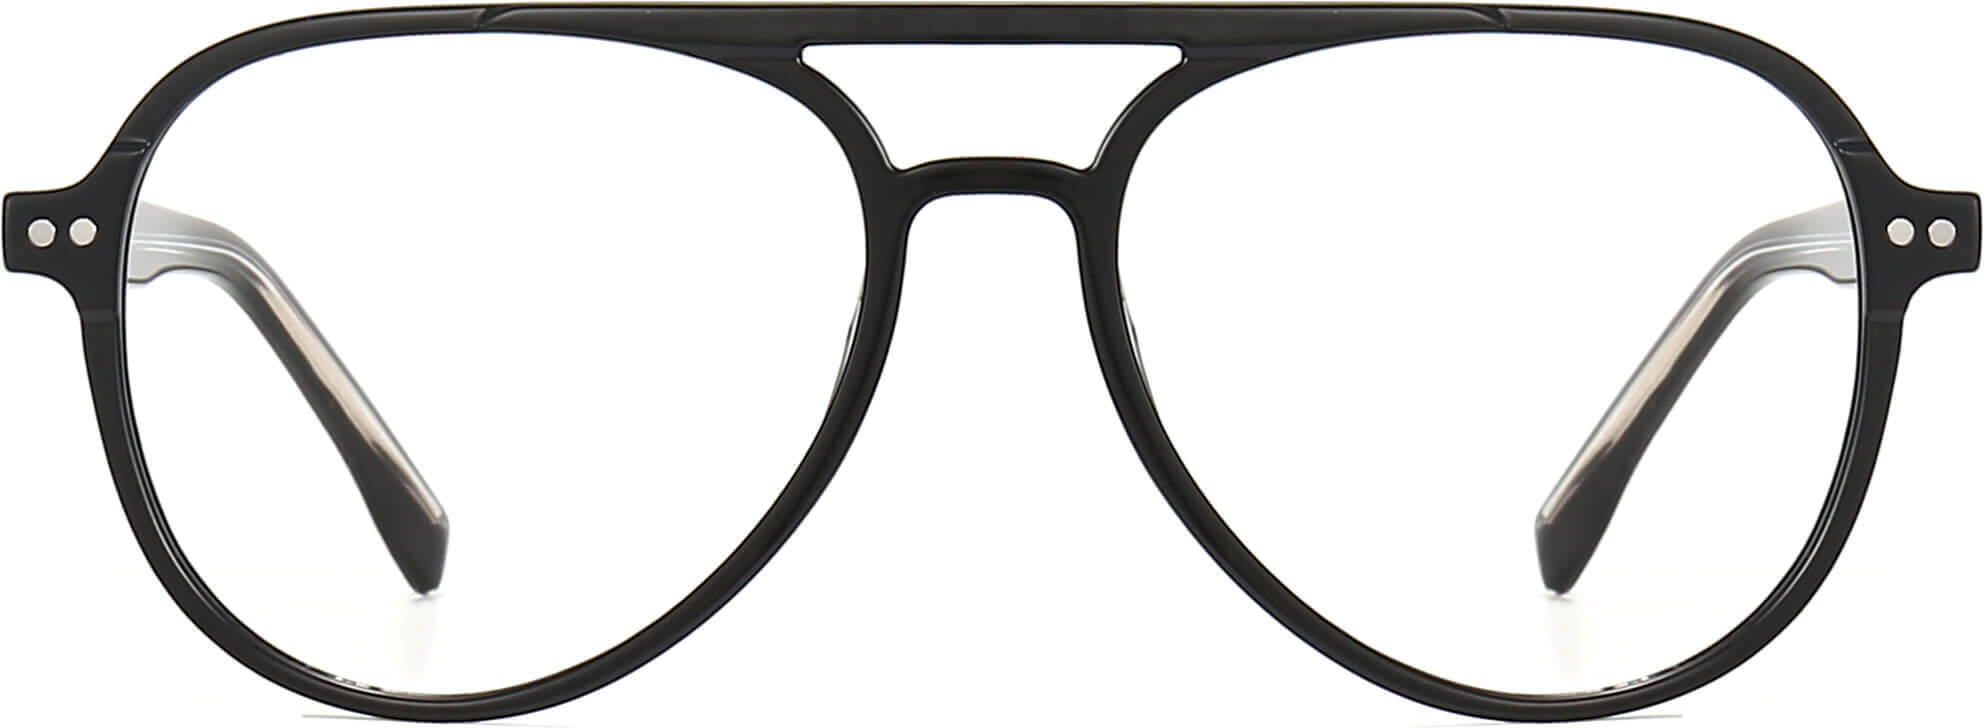 Zane Aviator Black Eyeglasses from ANRRI, front view